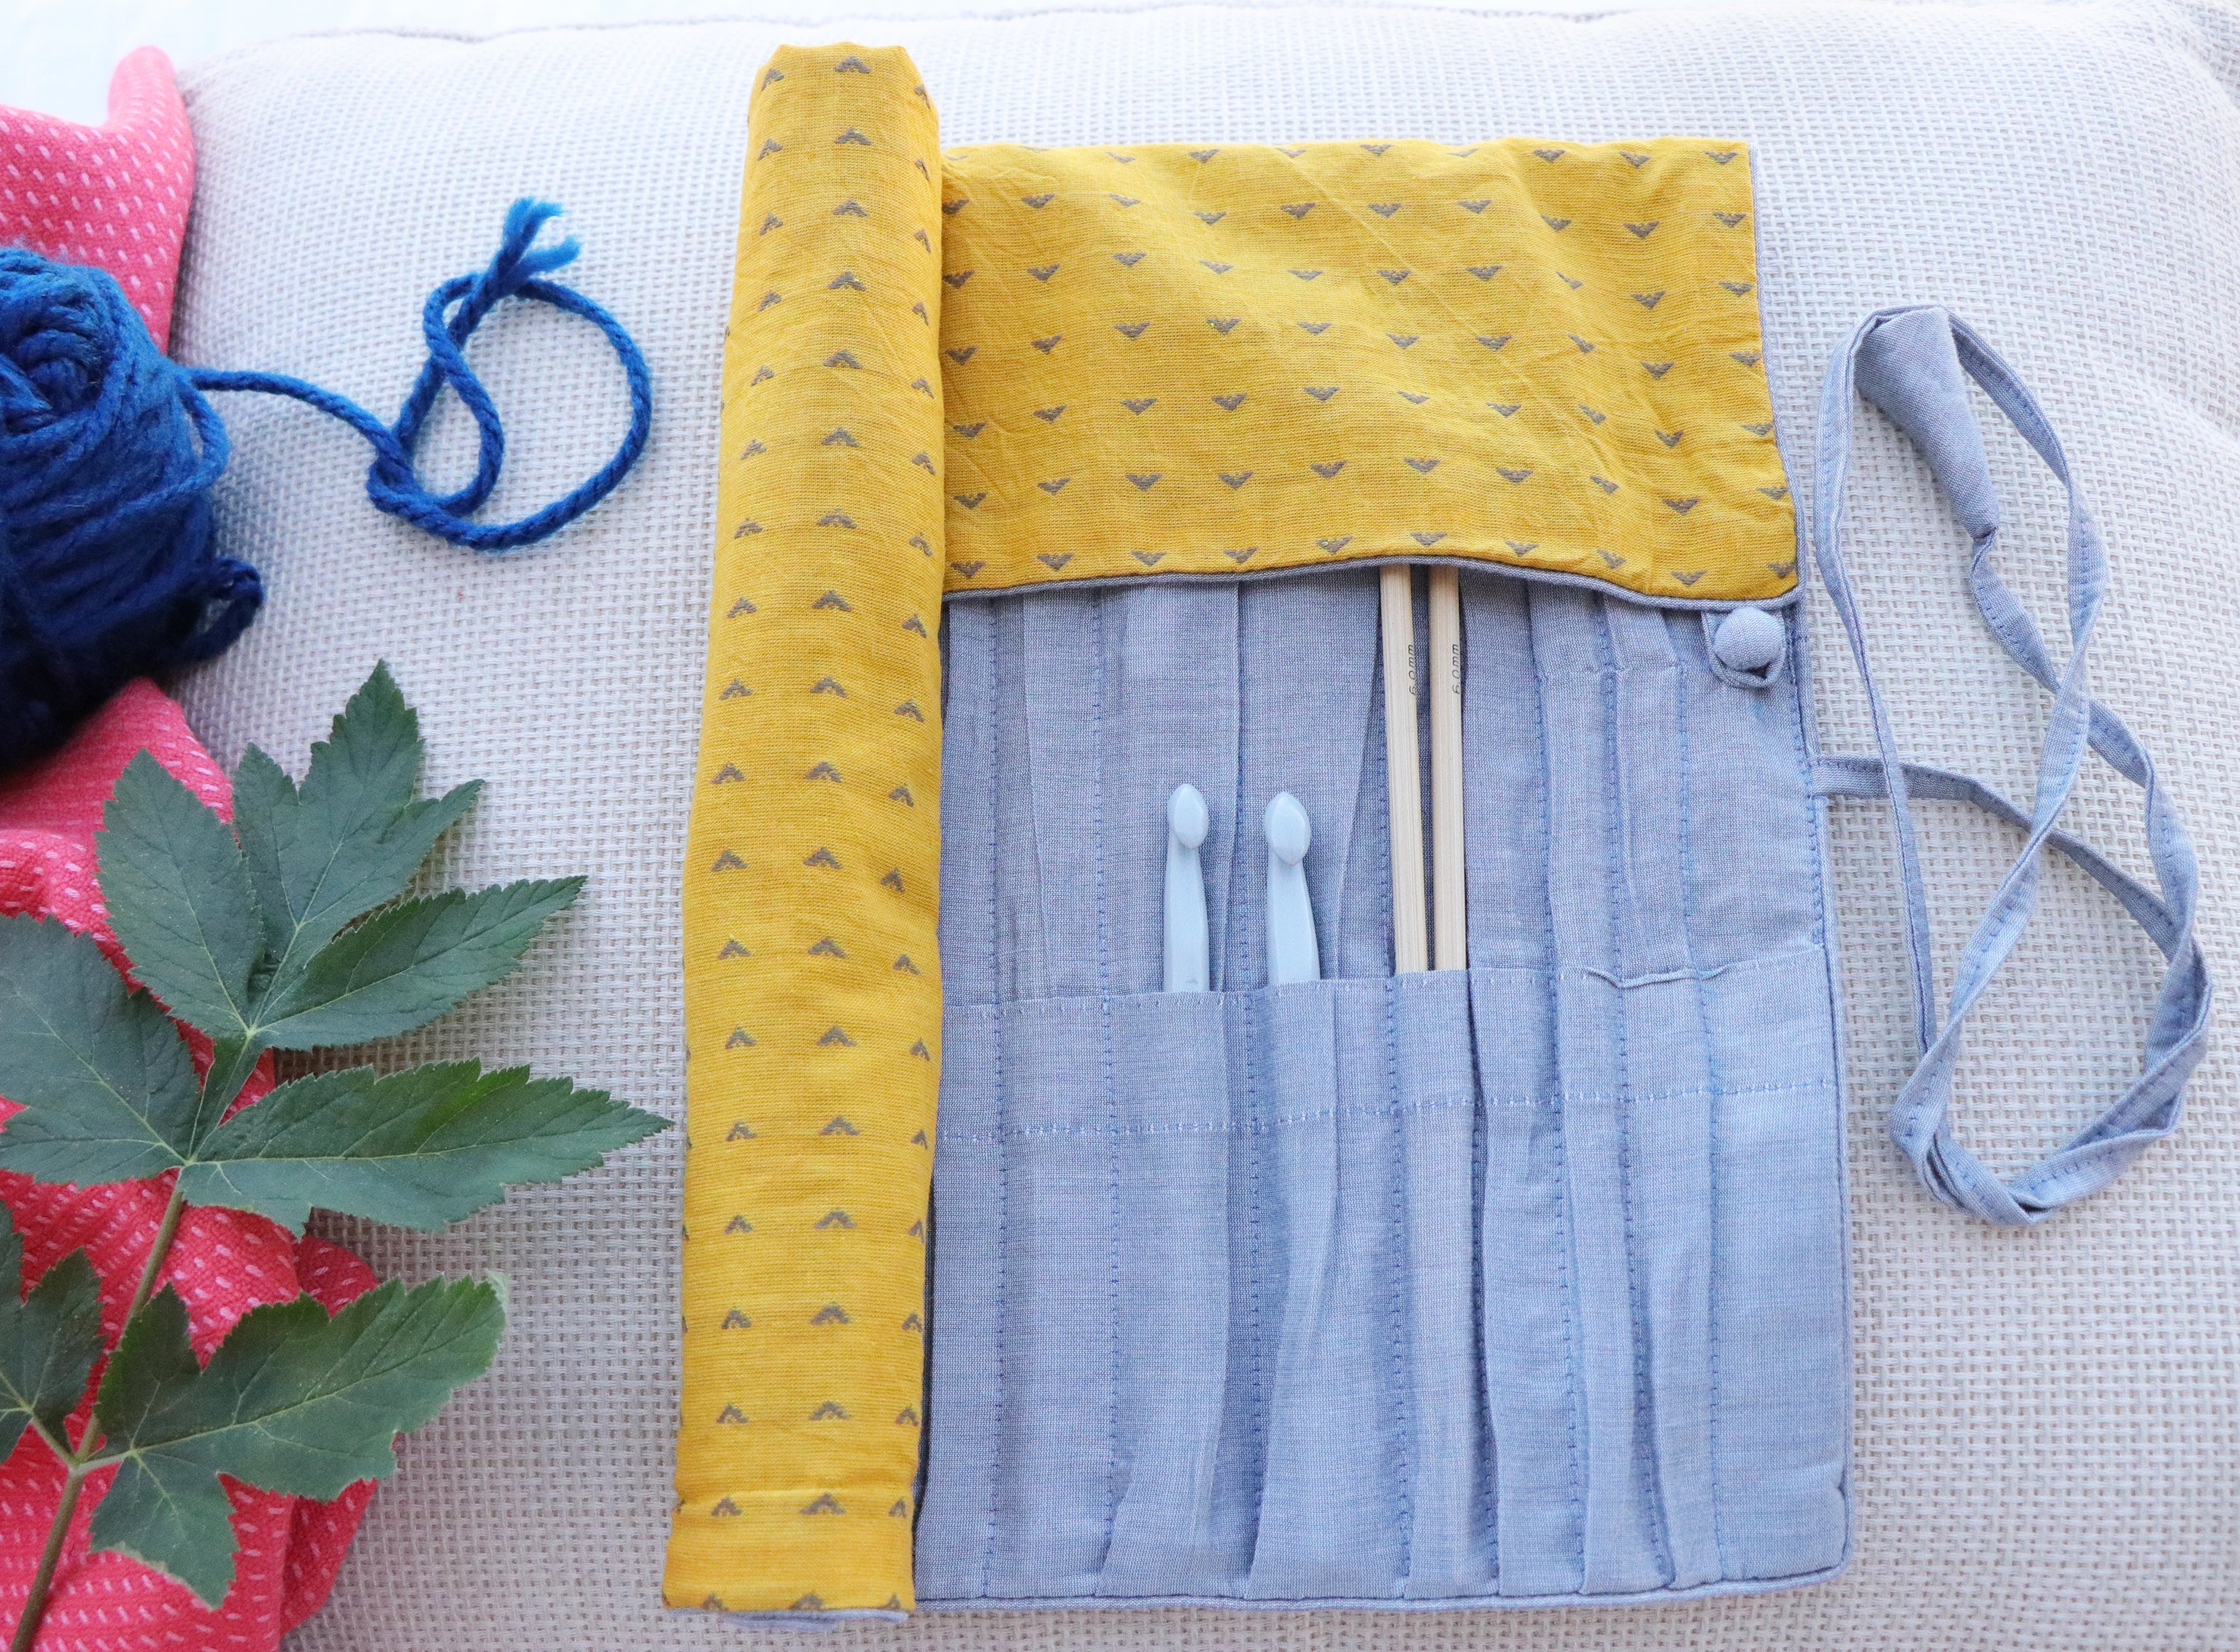 DIY Sewing Needle Wallet tutorial - The Crafty Gentleman